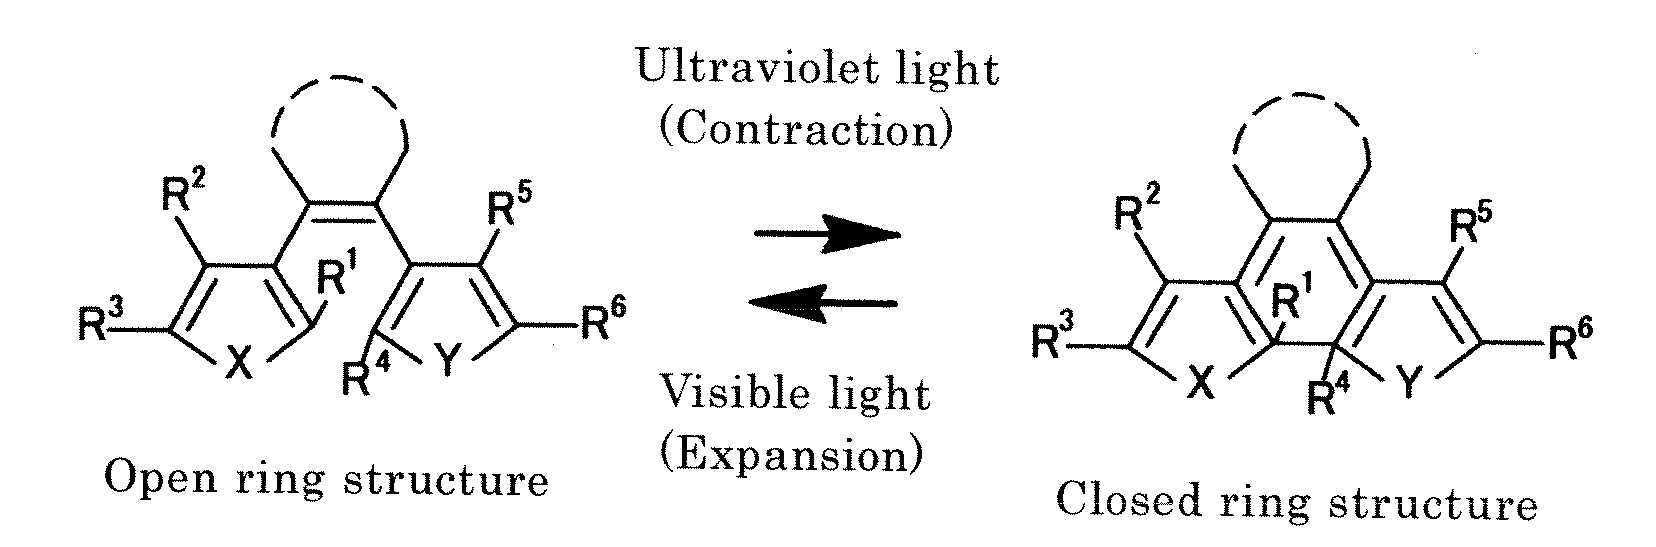 Light-activated actuator element